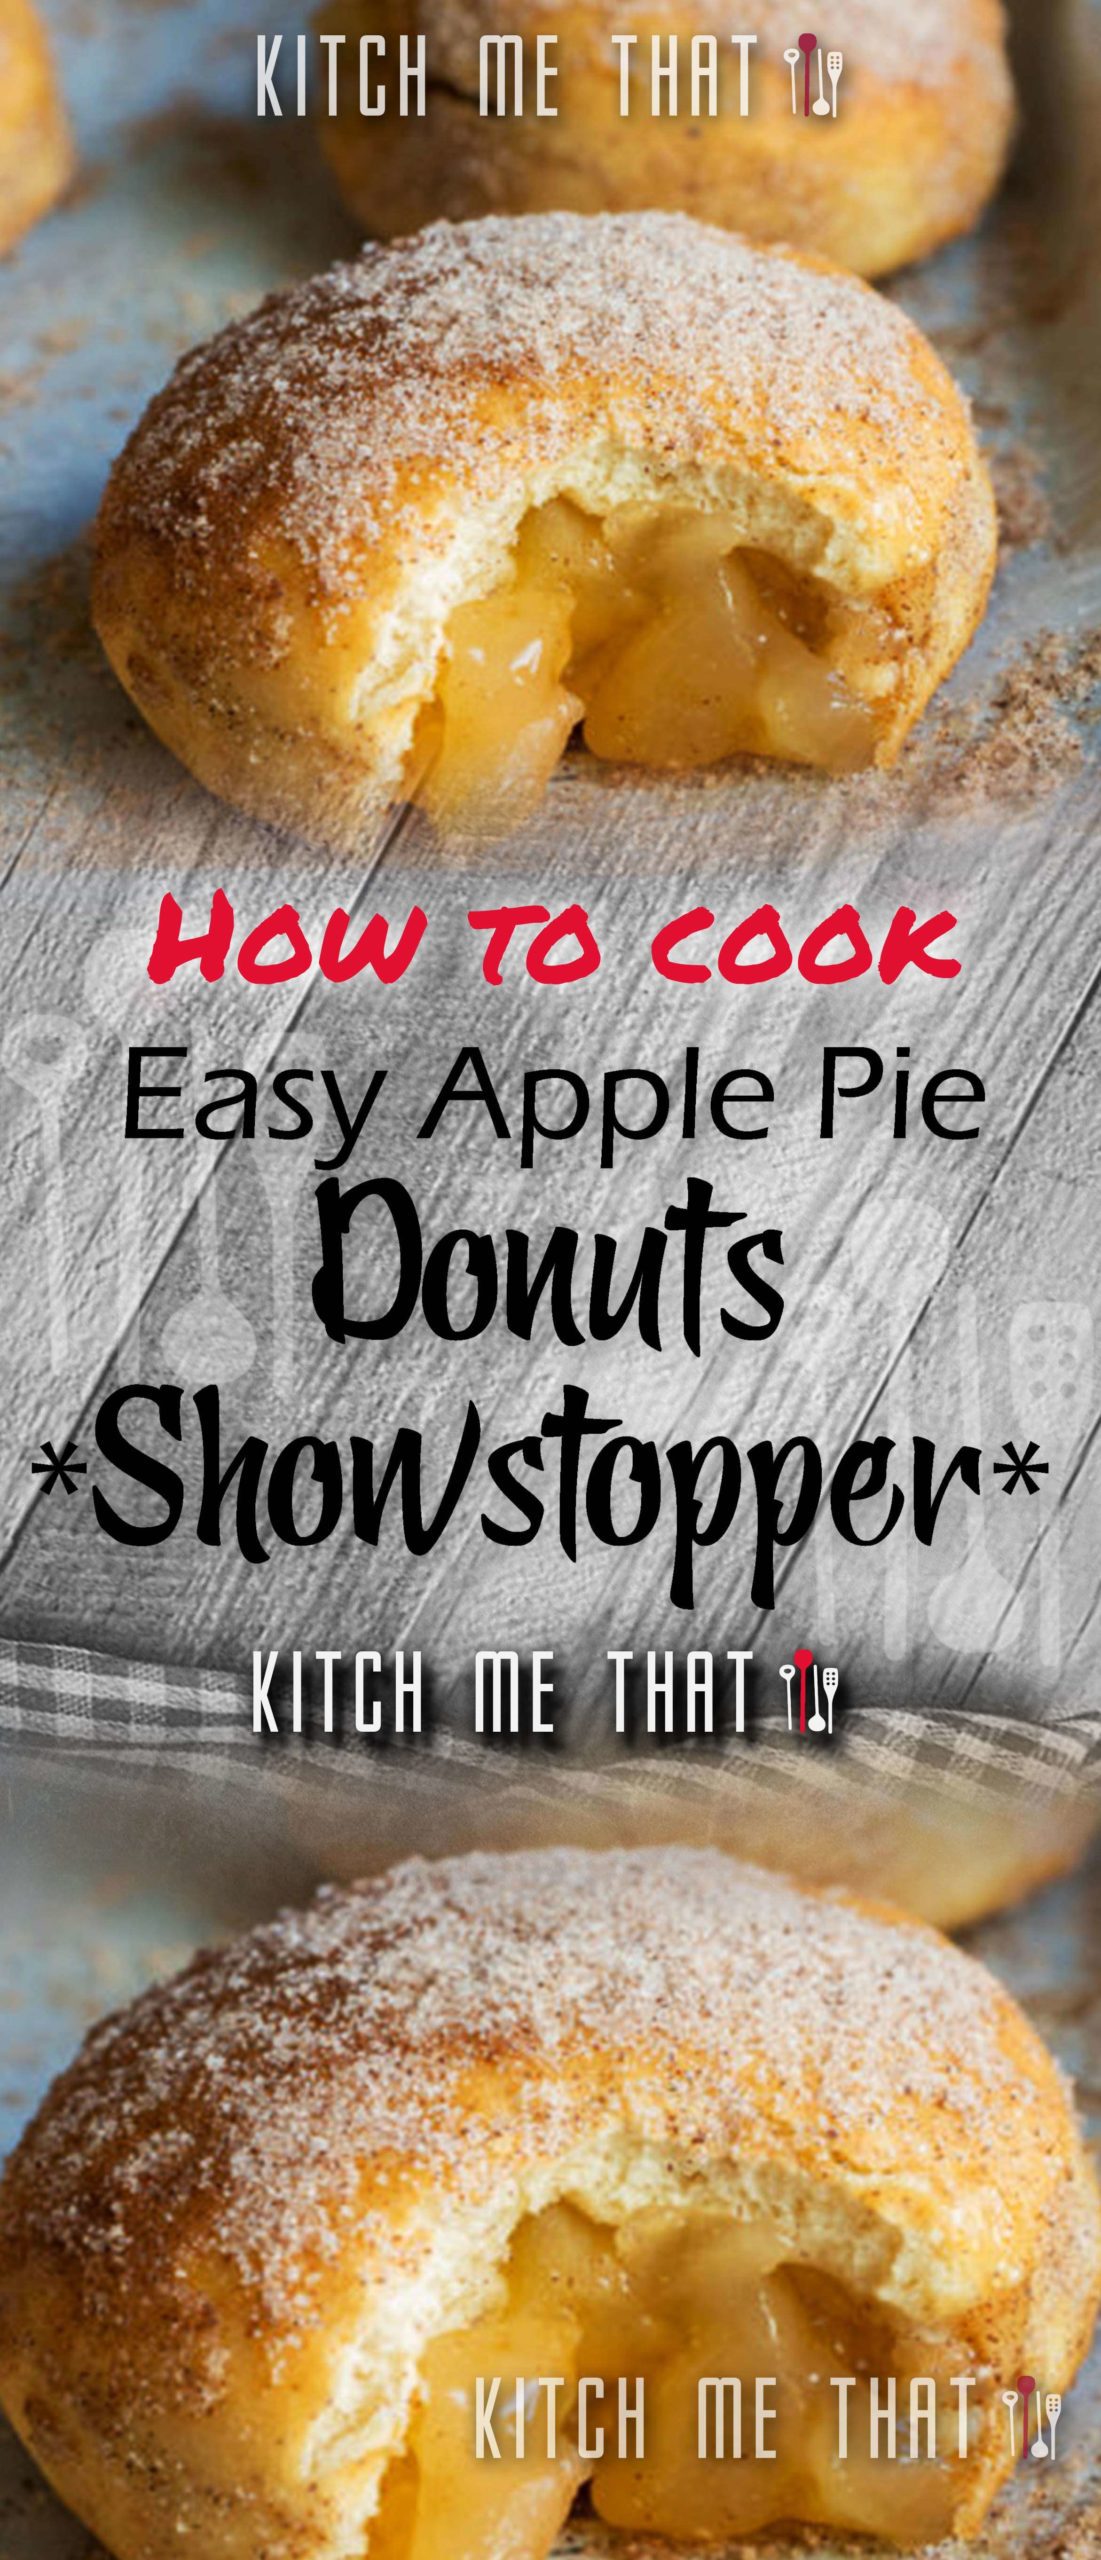 Easy Apple Pie Donuts